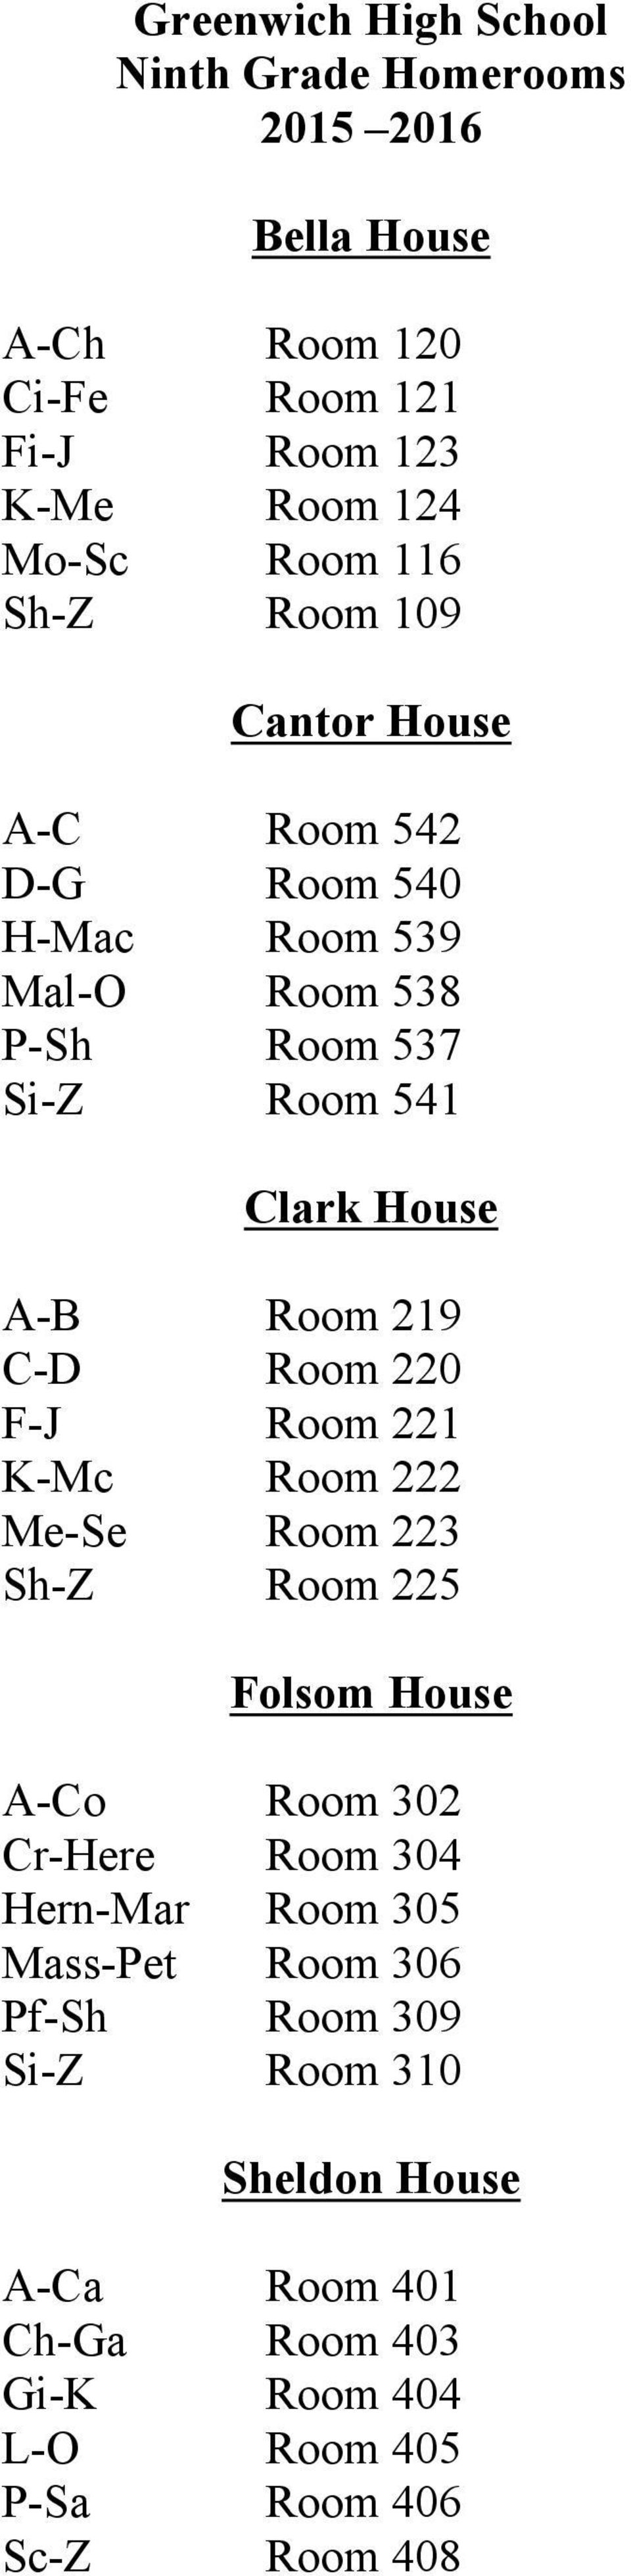 D Room 220 F J Room 221 K Mc Room 222 Me Se Room 223 Sh Z Room 225 Folsom House A Co Room 302 Cr Here Room 304 Hern Mar Room 305 Mass Pet